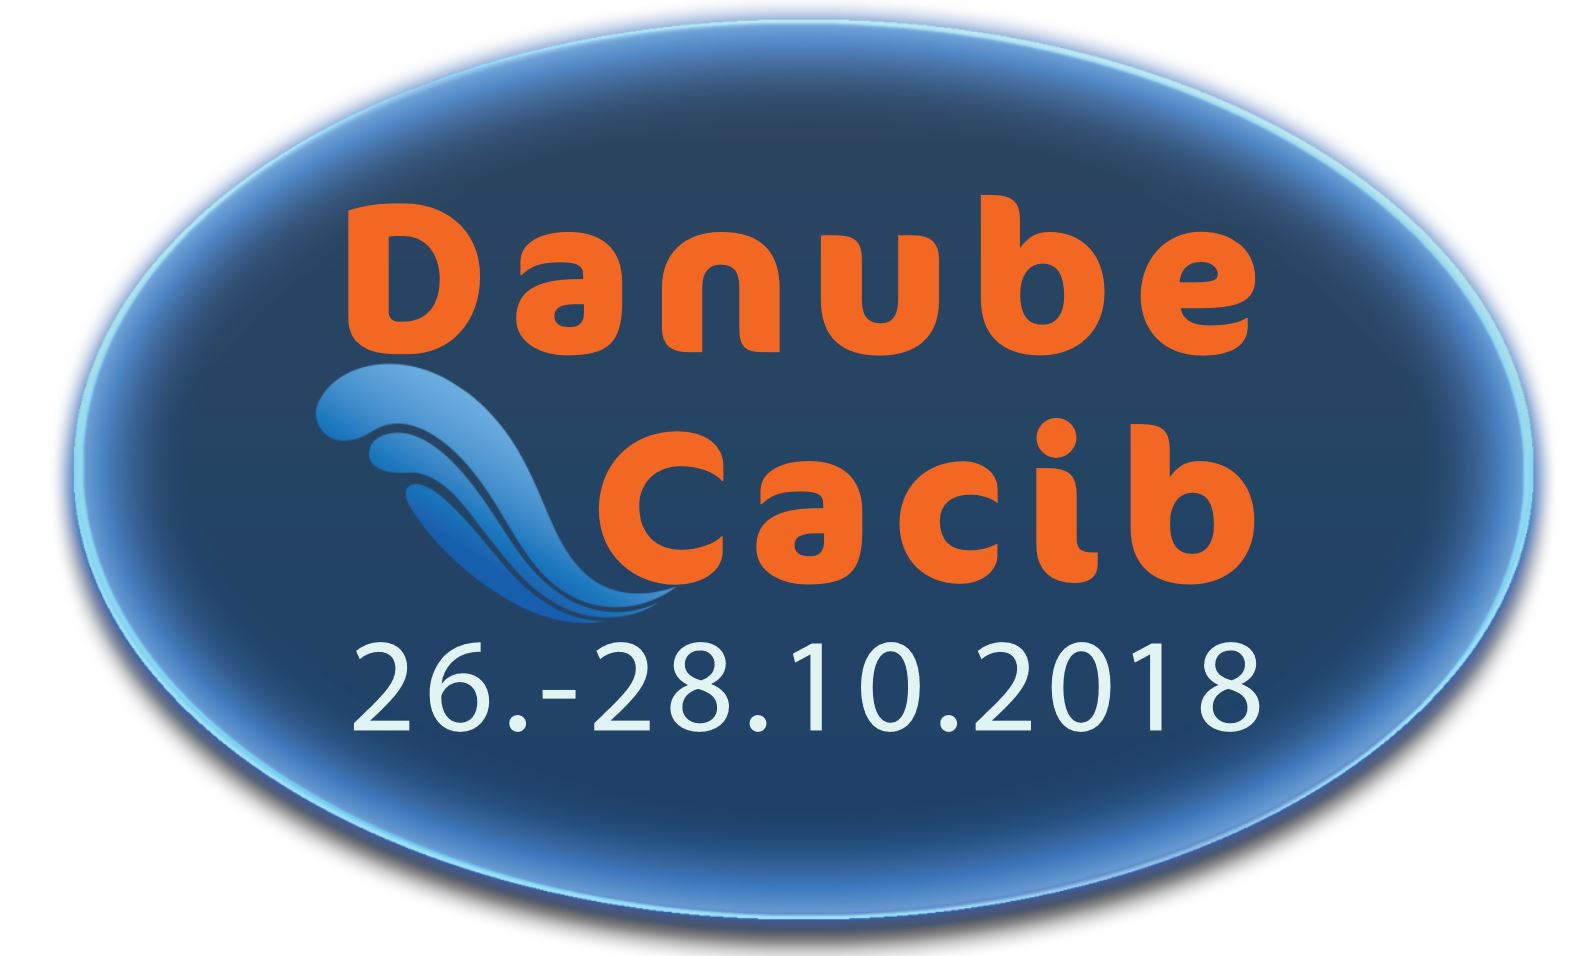 CACIB BA 10 2018 logo